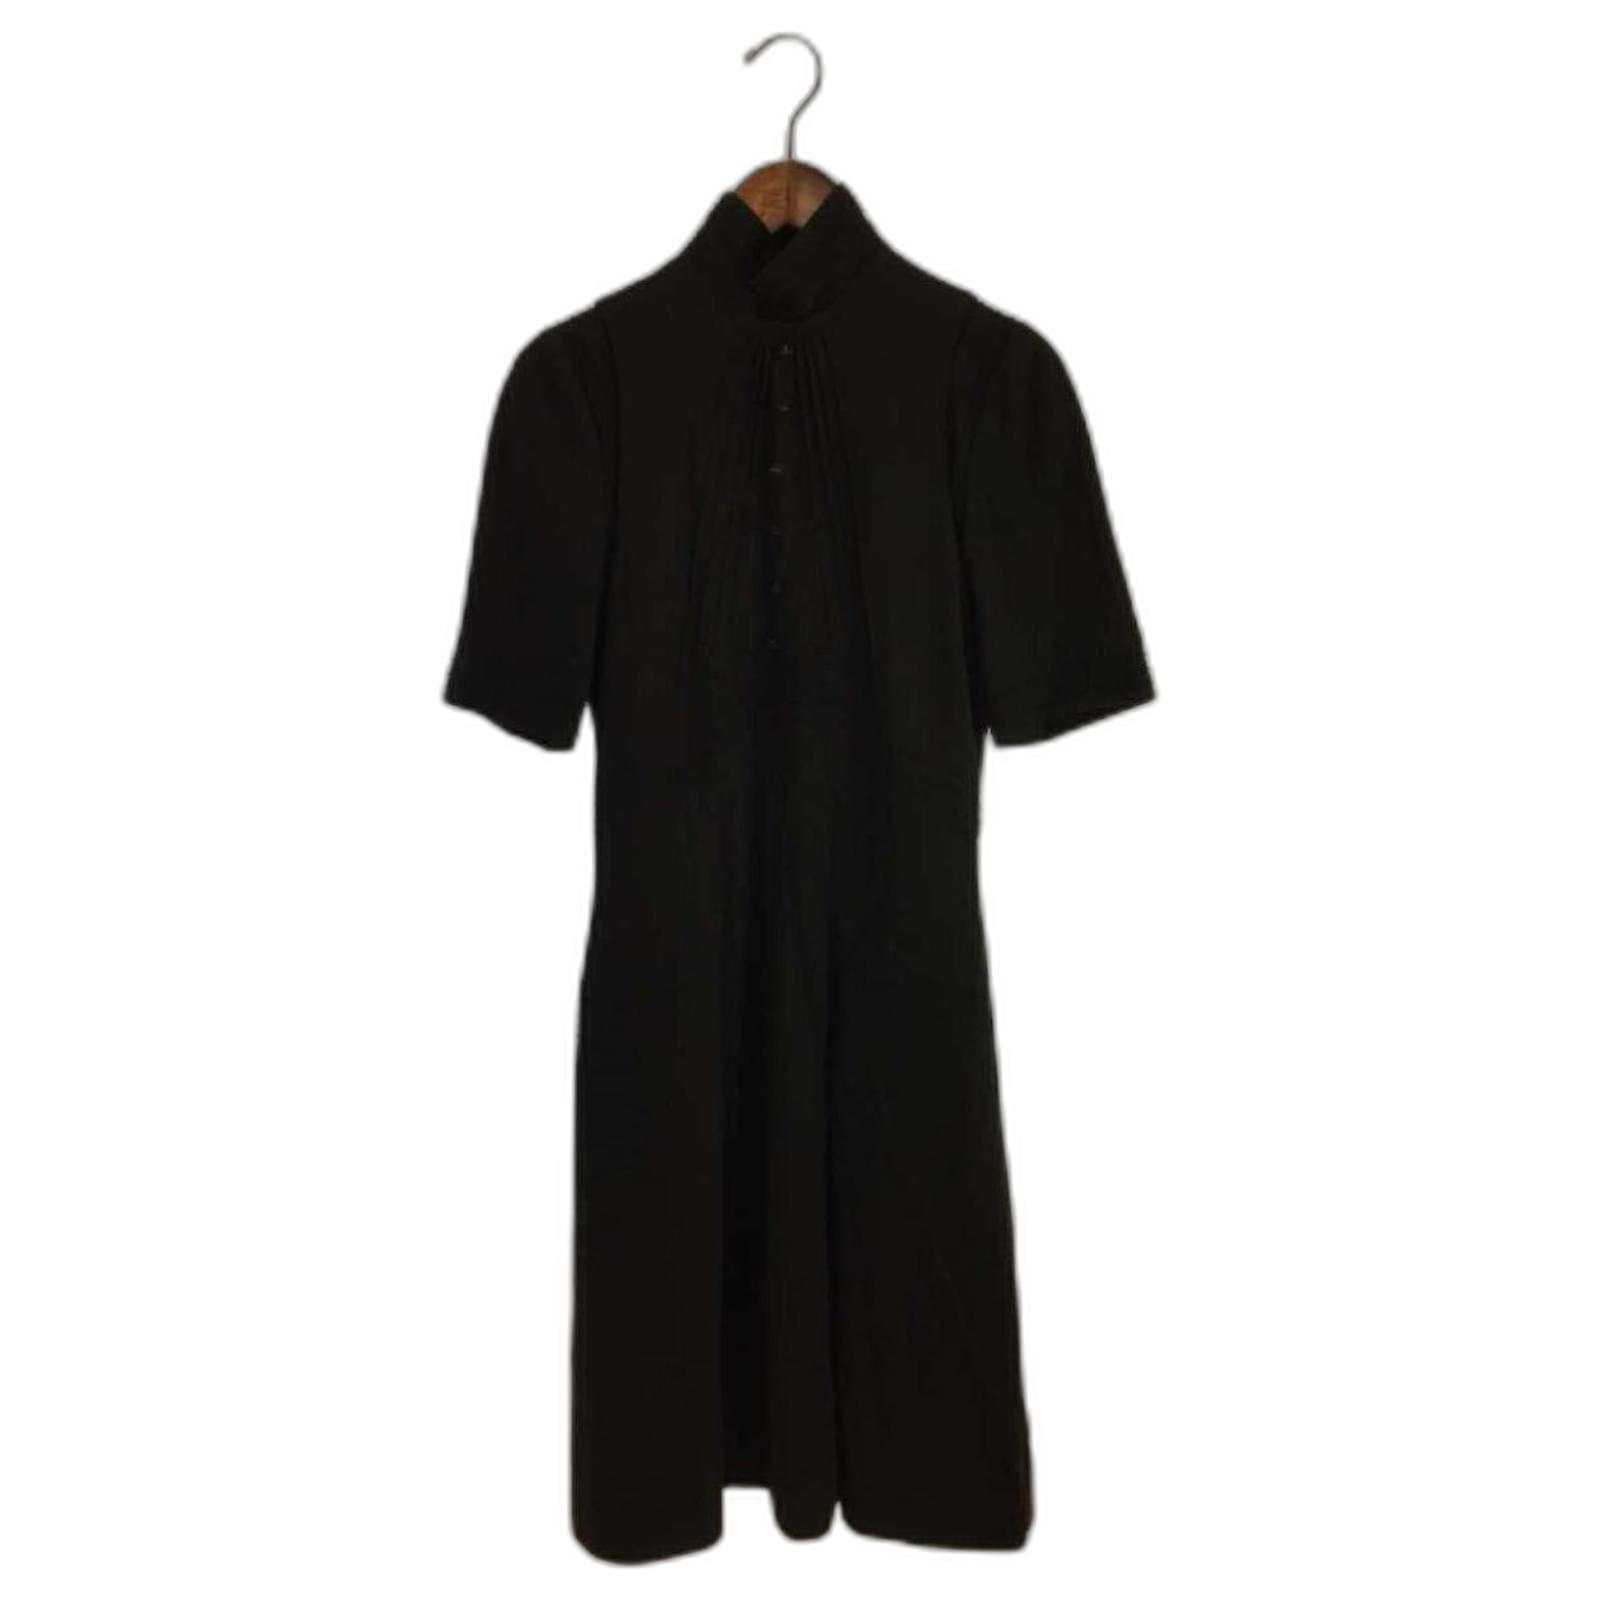 CHANEL Short sleeve dress / 38 / wool / BLK / P29300V19004 / coco 